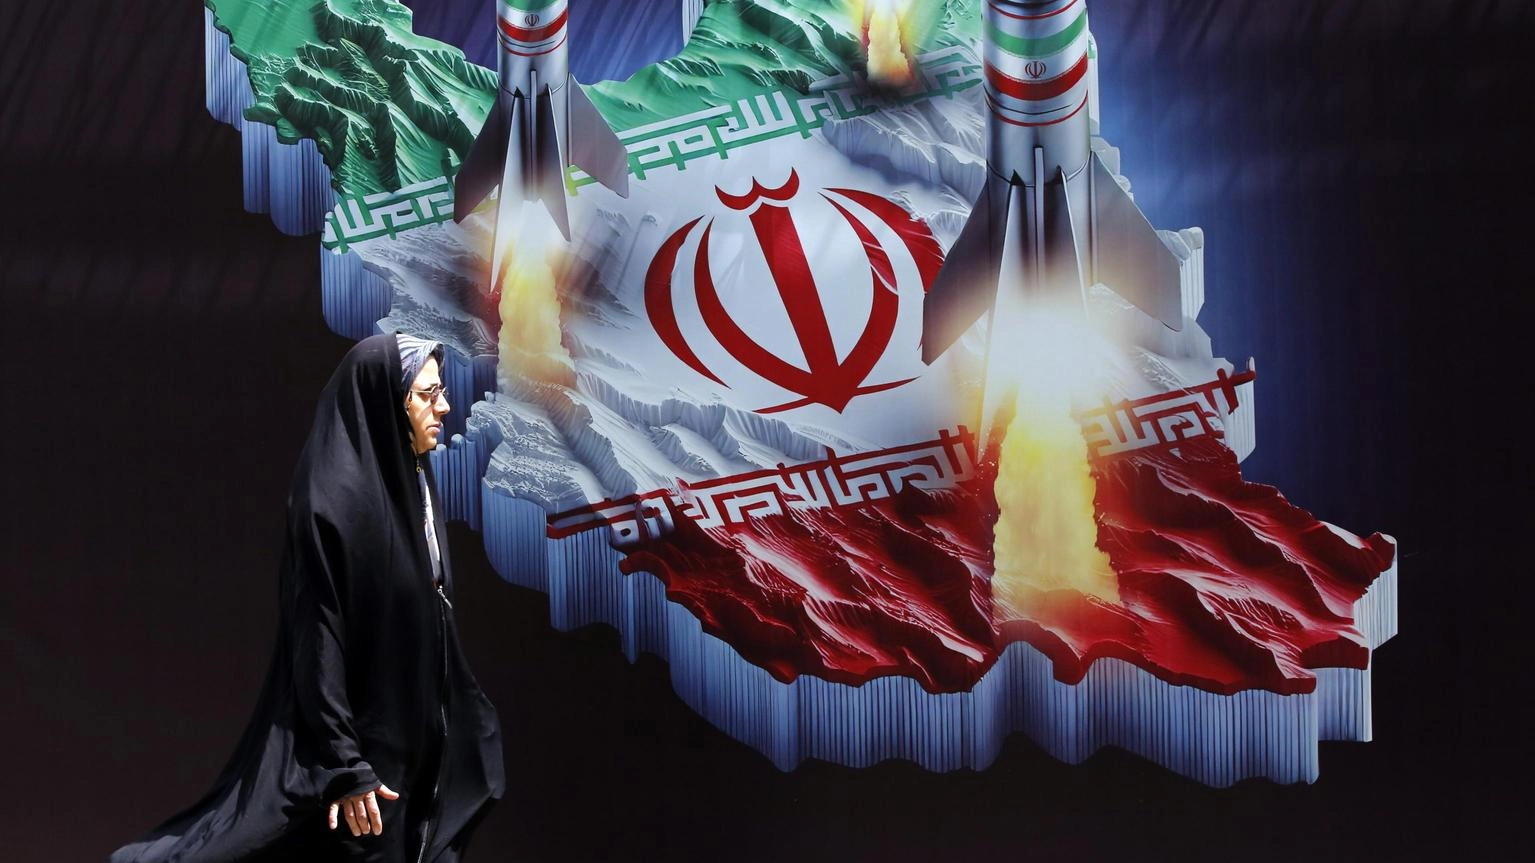 L'Iran minaccia di attaccare i siti nucleari israeliani